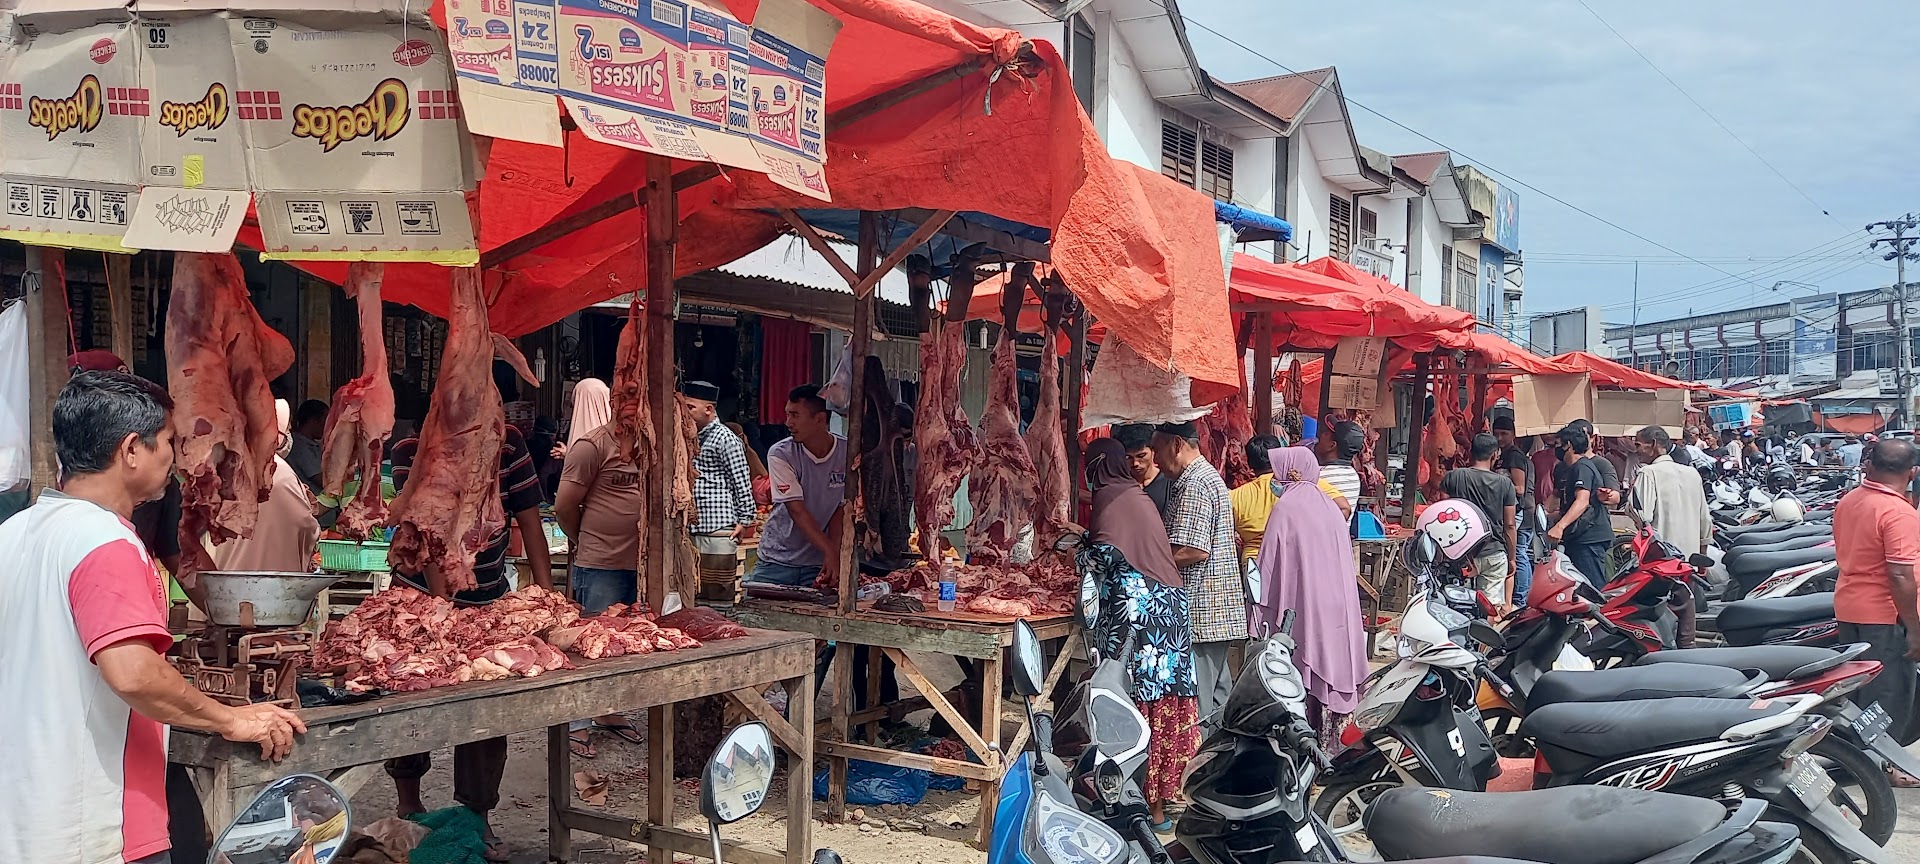 Gambar Pasar Tradisional Simpang Tujuh Ulee Kareng